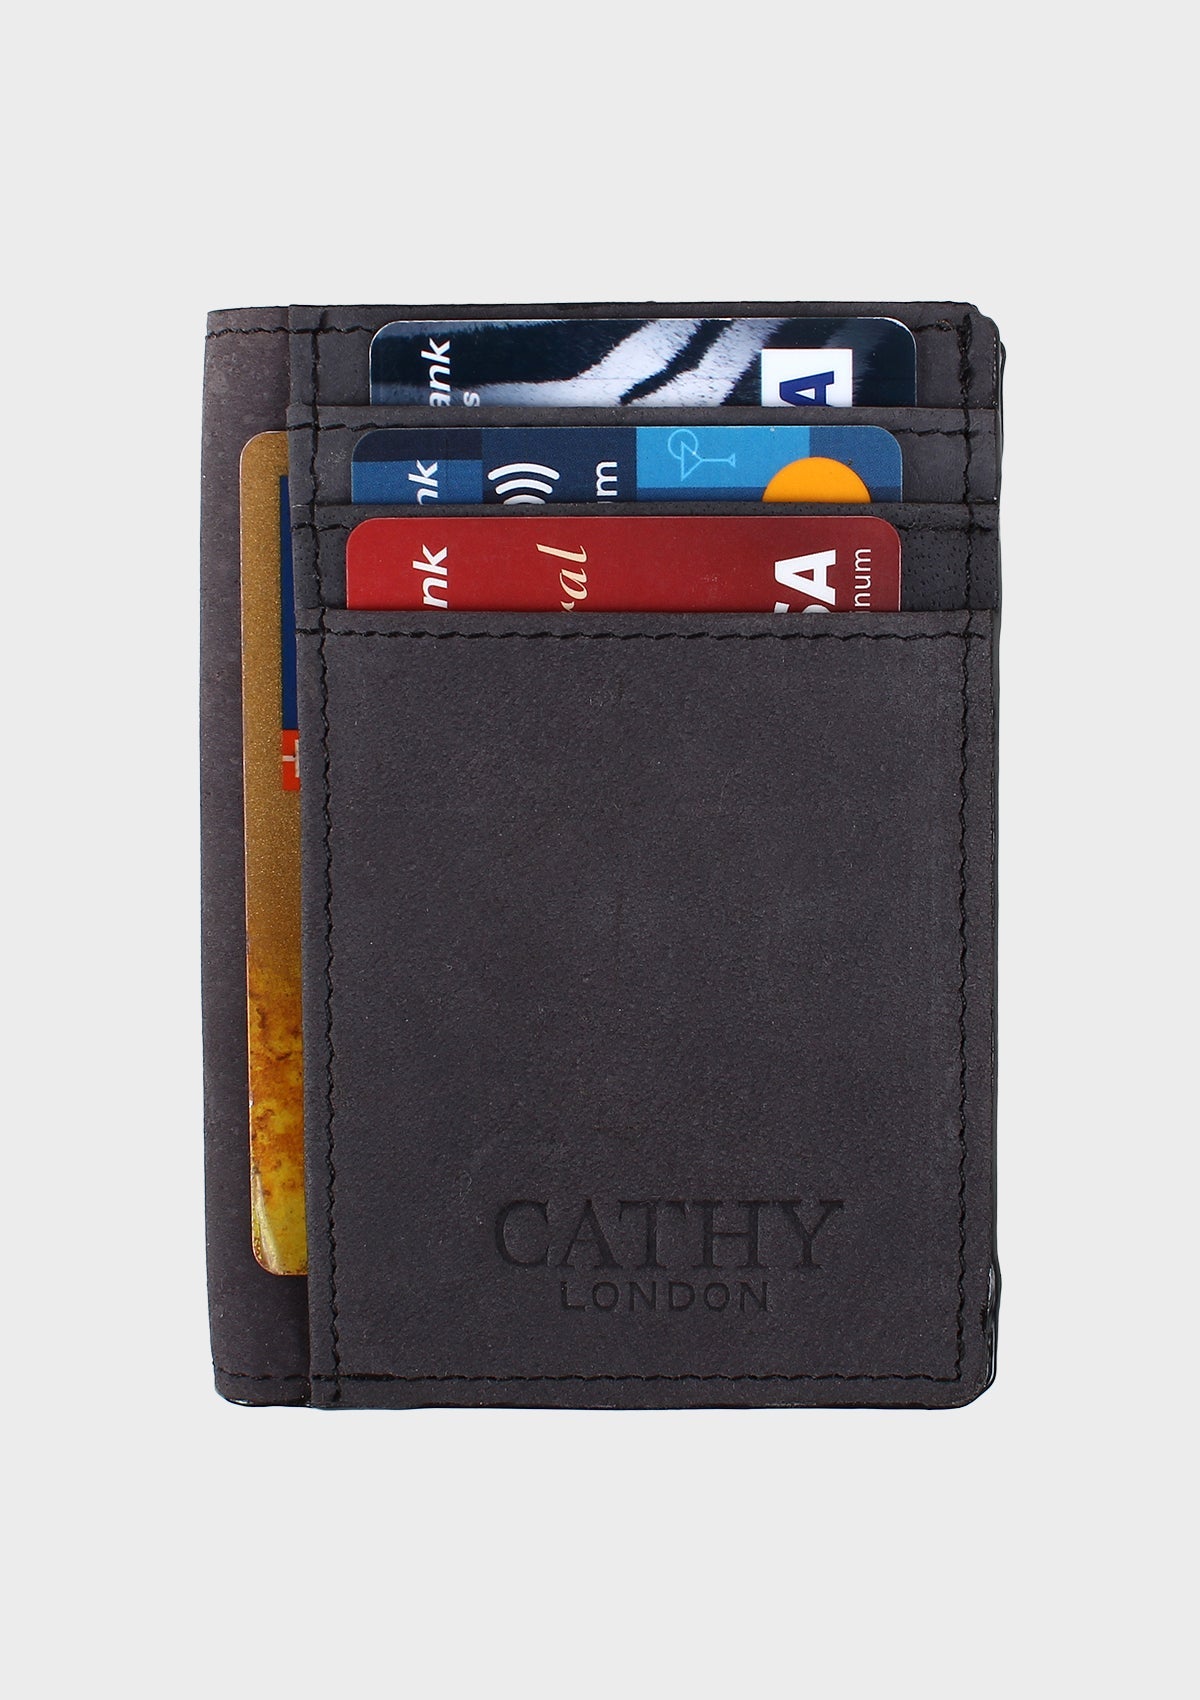 Black Colour Bi-Fold Italian Leather Slim Wallet/Card Holder (9 Card Slot + 3 Hidden Compartment + 1 ID Slot + Cash Compartment)